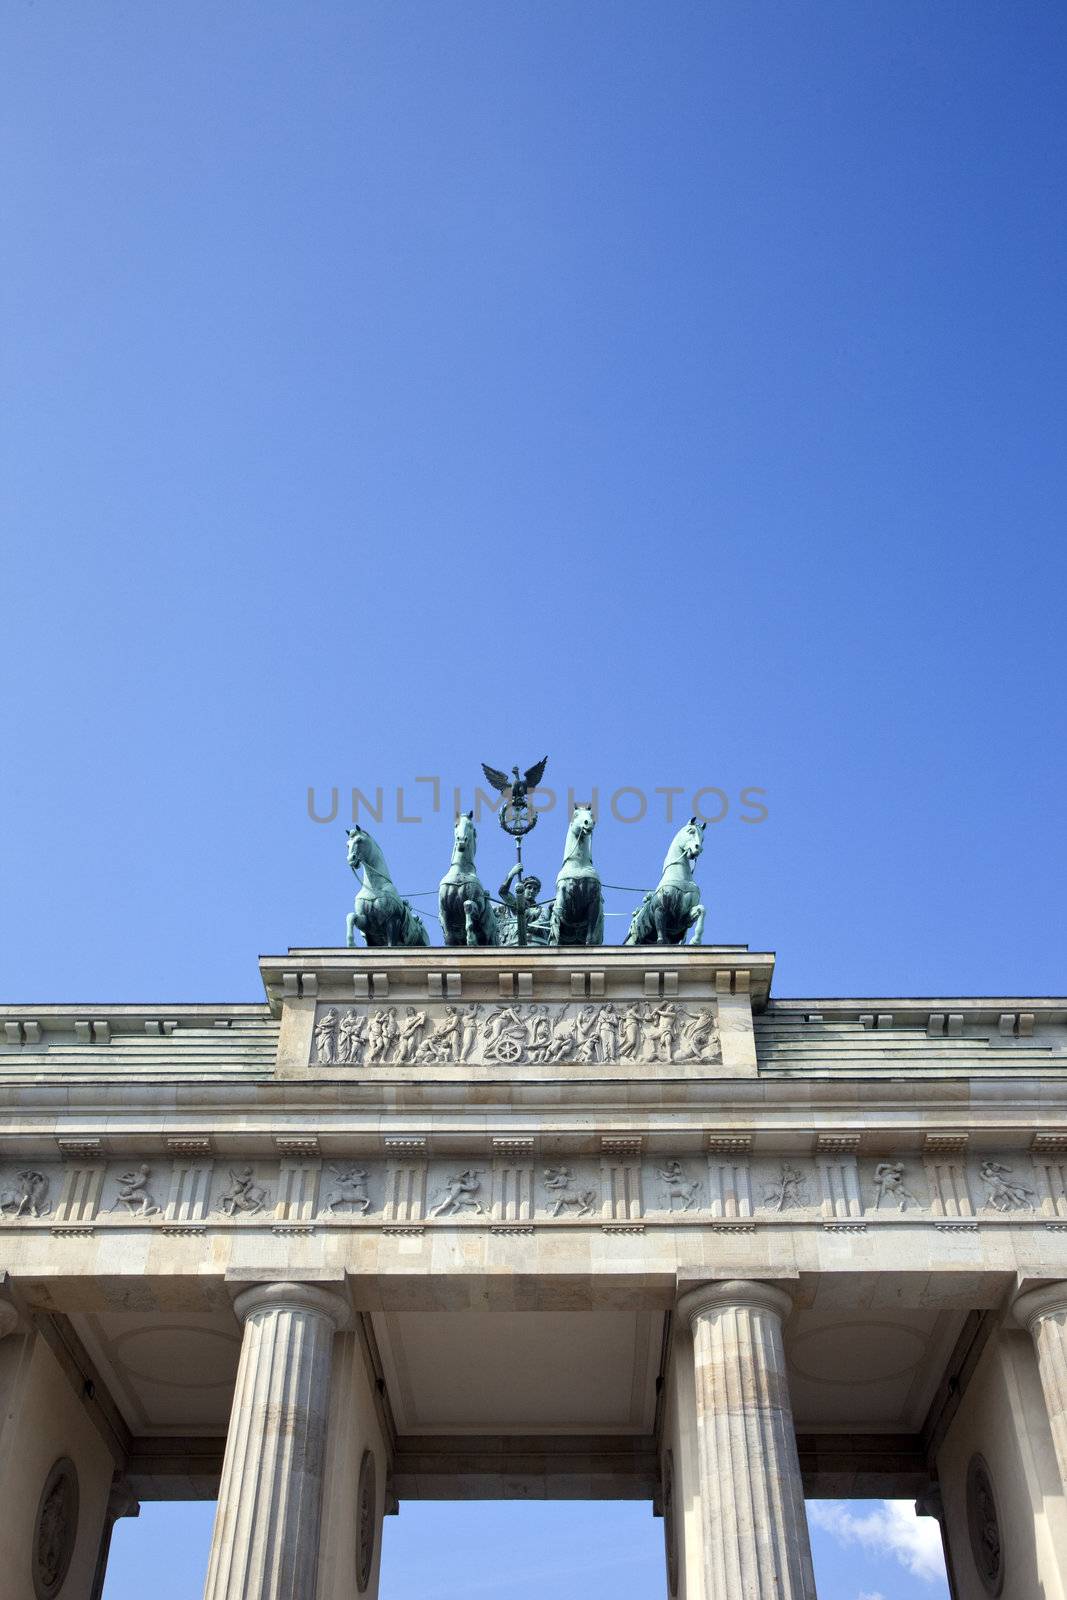 The Brandenburg Gate in Berlin.